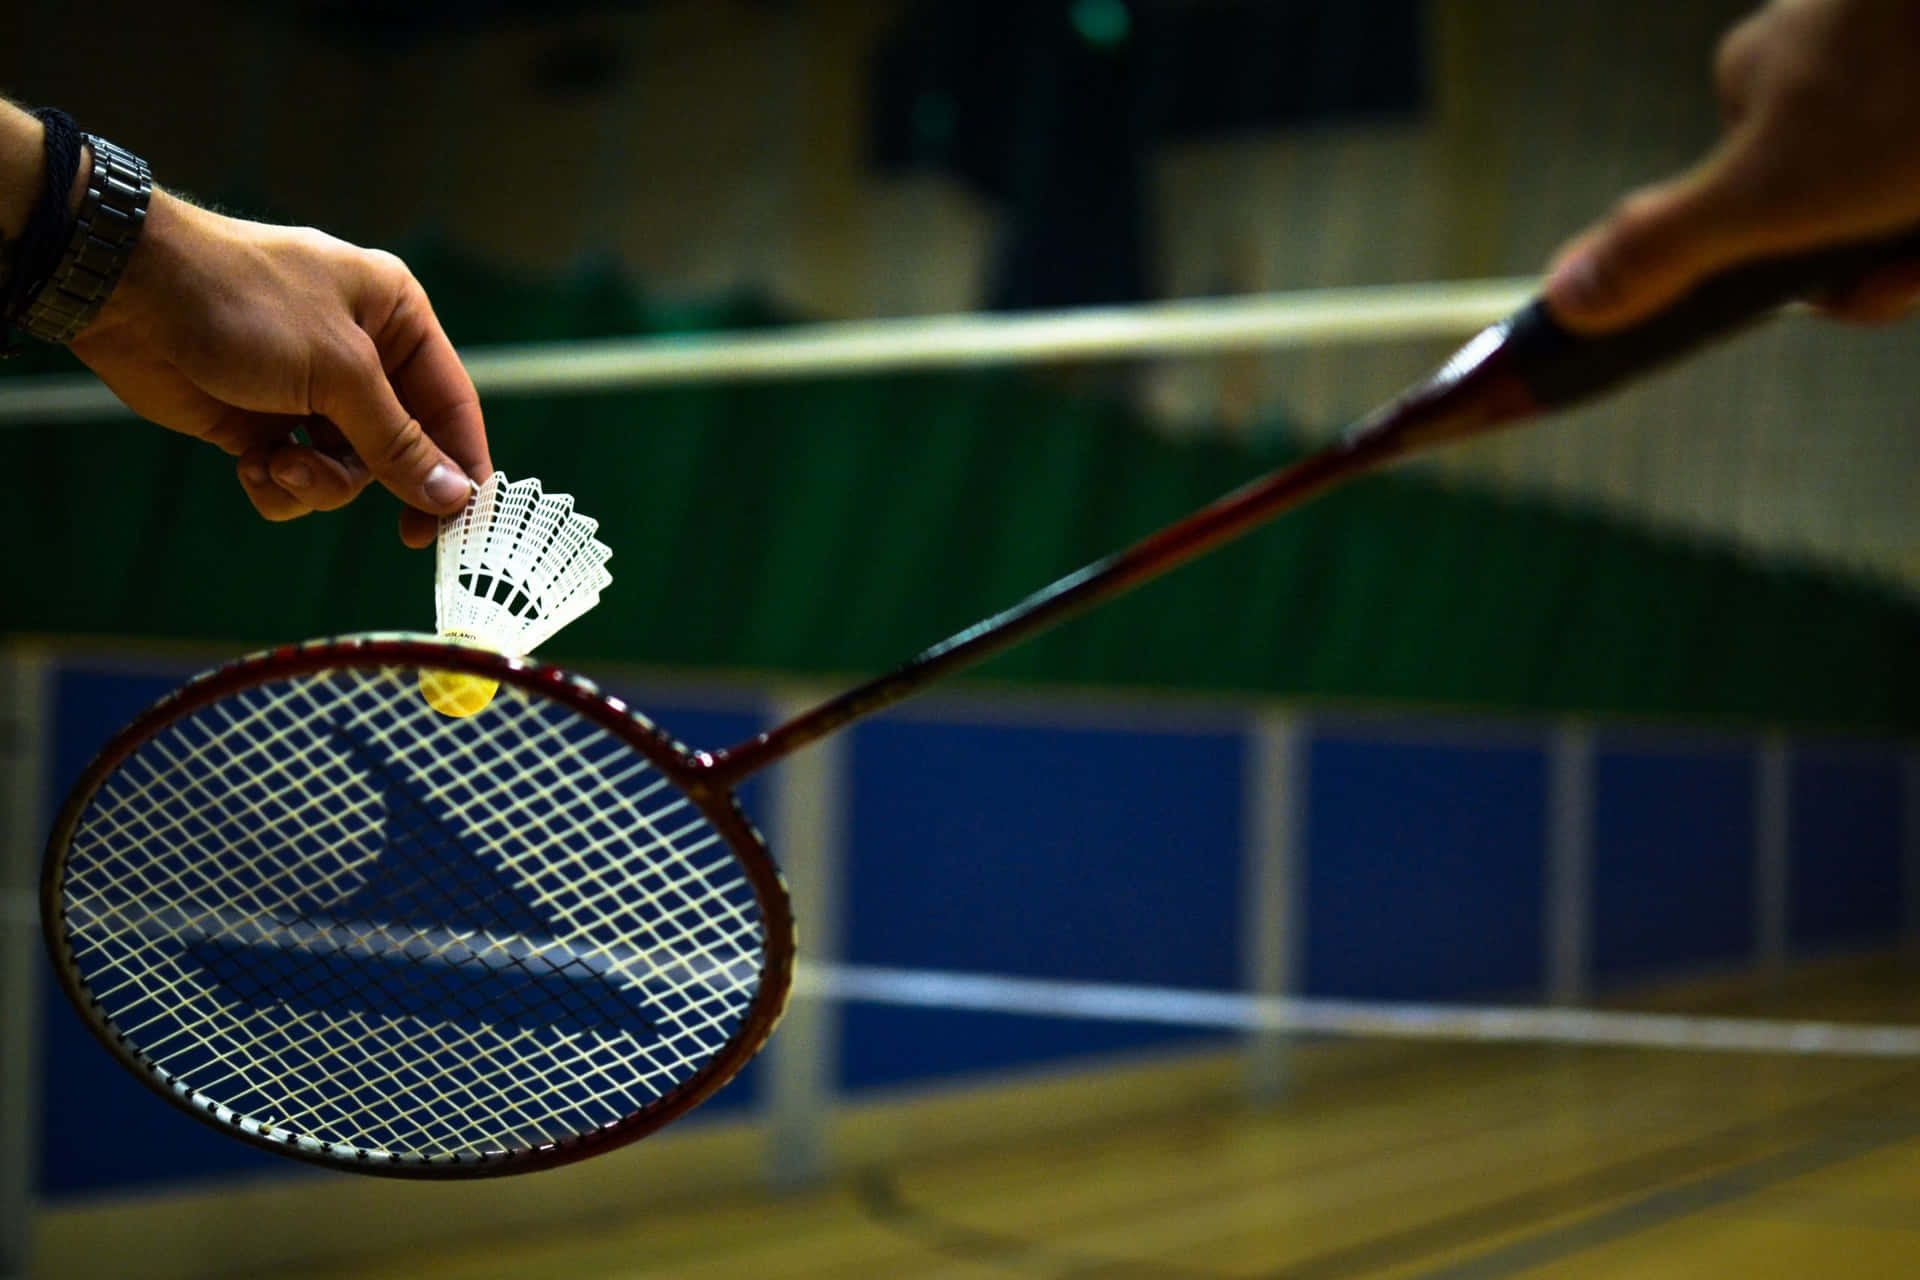 Sharpen Your Reaction During Intense Badminton Games